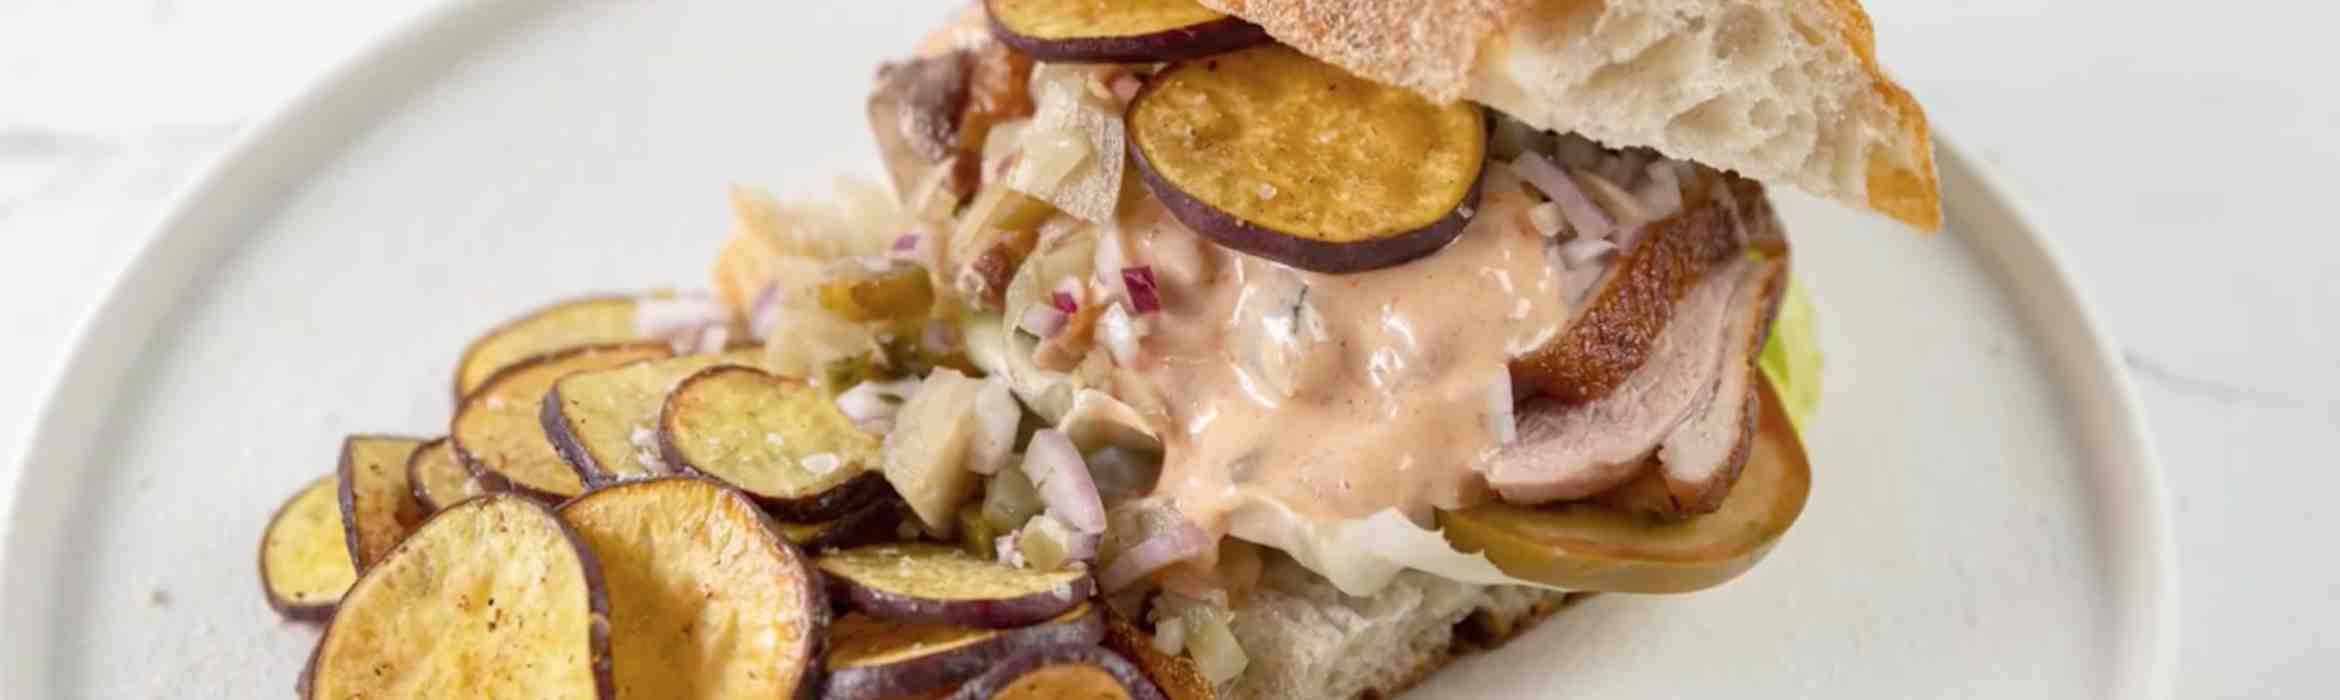 Duck Sandwich with Sweet Potato Chips Recipe